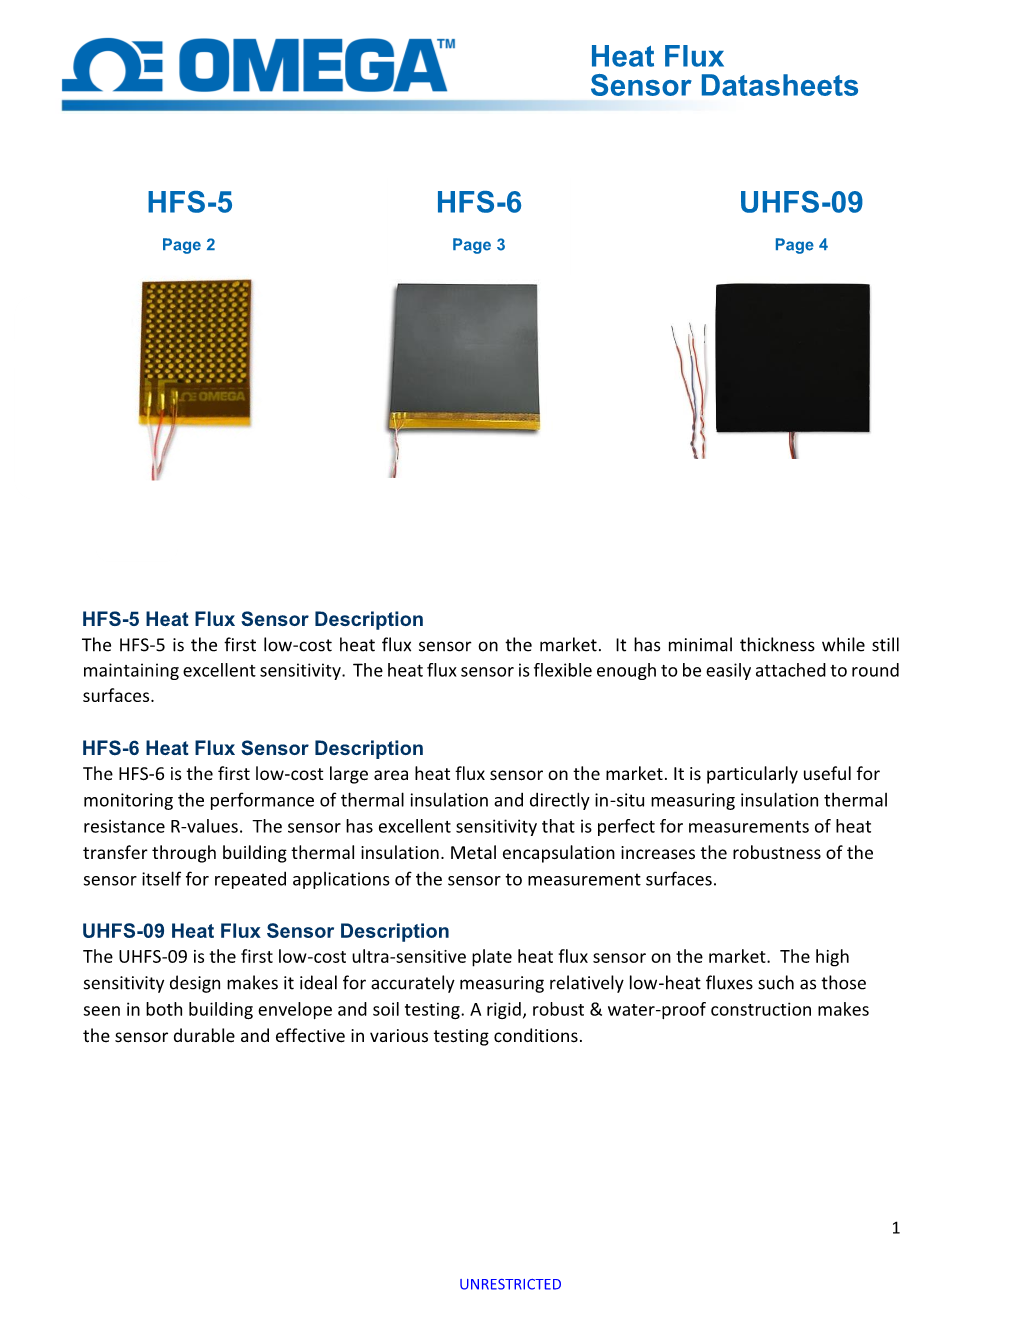 Heat Flux Sensor Datasheets HFS-5 HFS-6 UHFS-09